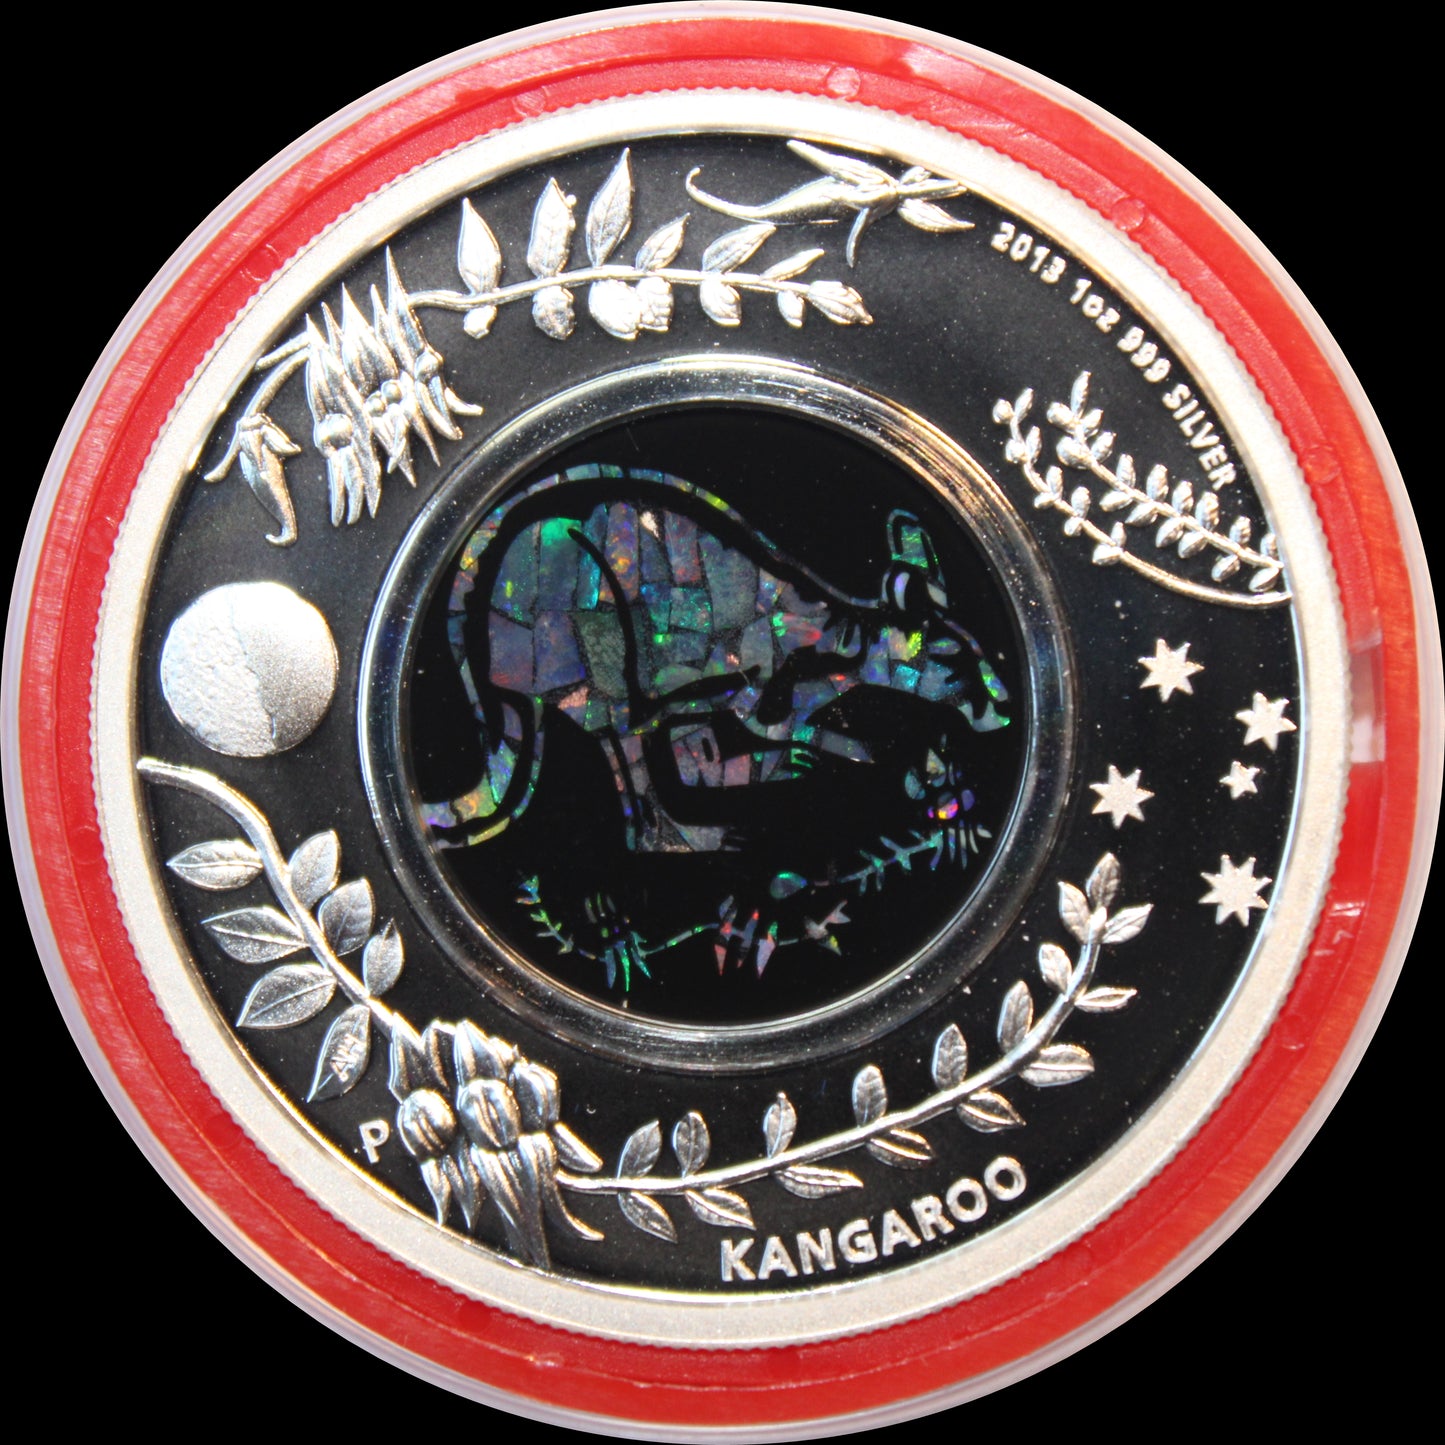 KANGAROO - KANGAROO, Australian Opal Series 1 oz Silver Proof $1, 2014